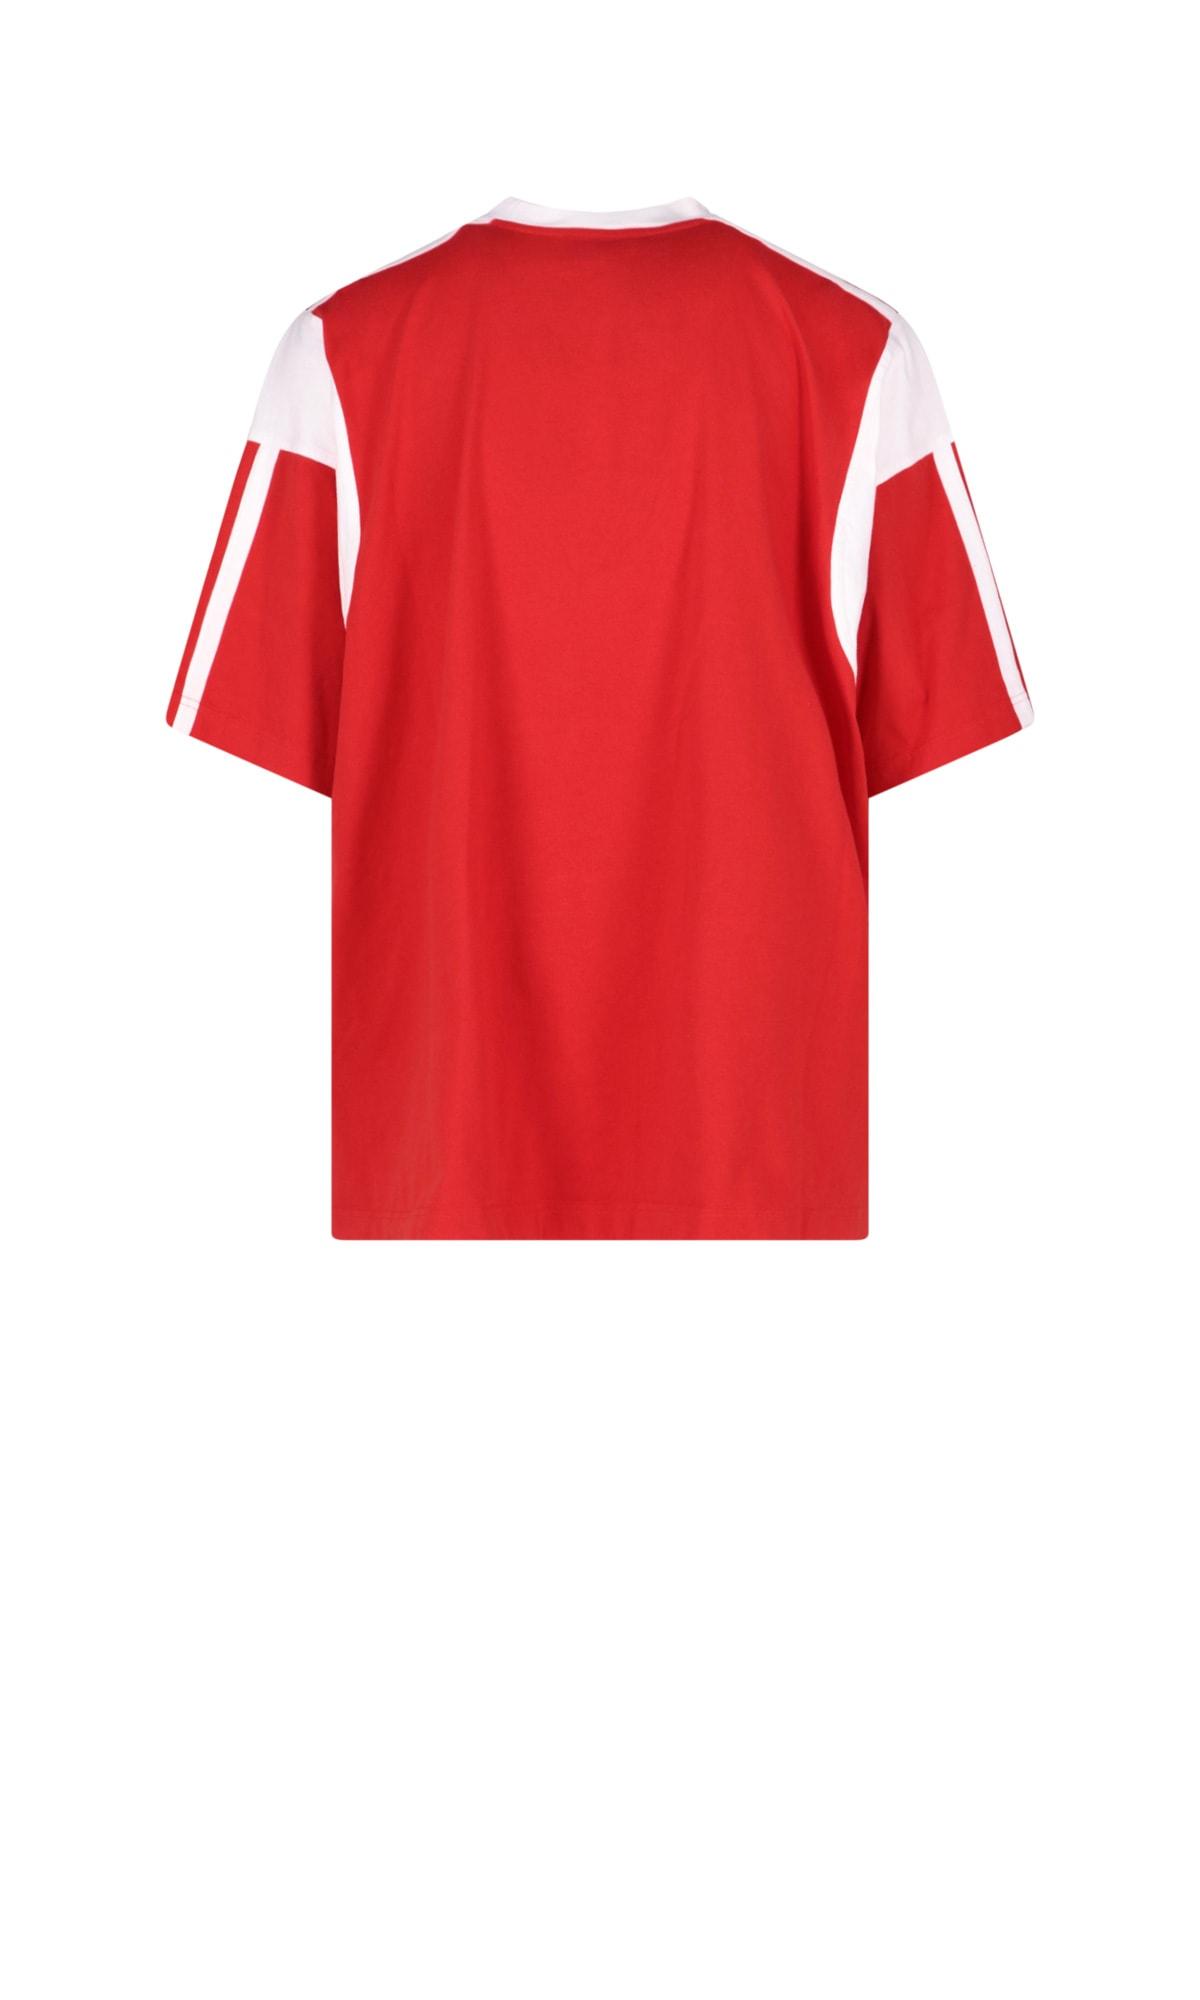 Balenciaga Logo T-shirt in Red for Men - Save 15% | Lyst